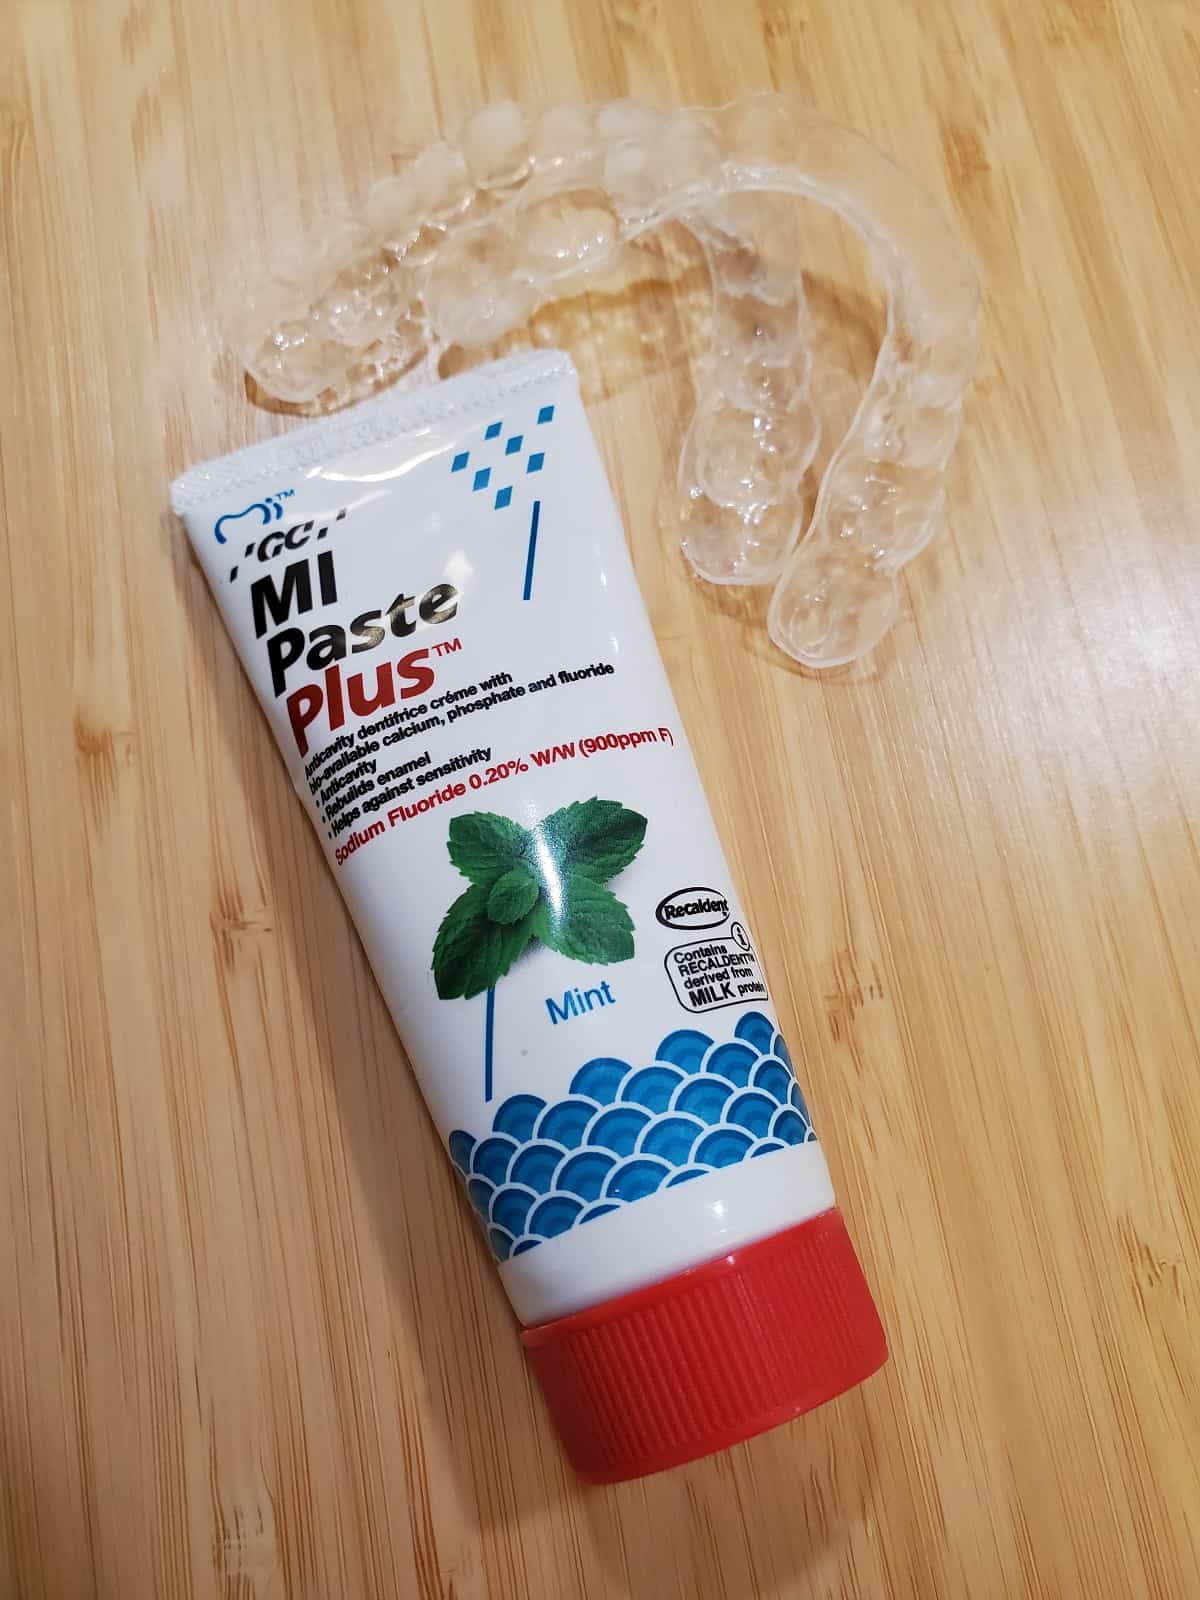 white bottle of MI Paste Plus on a wooden background.